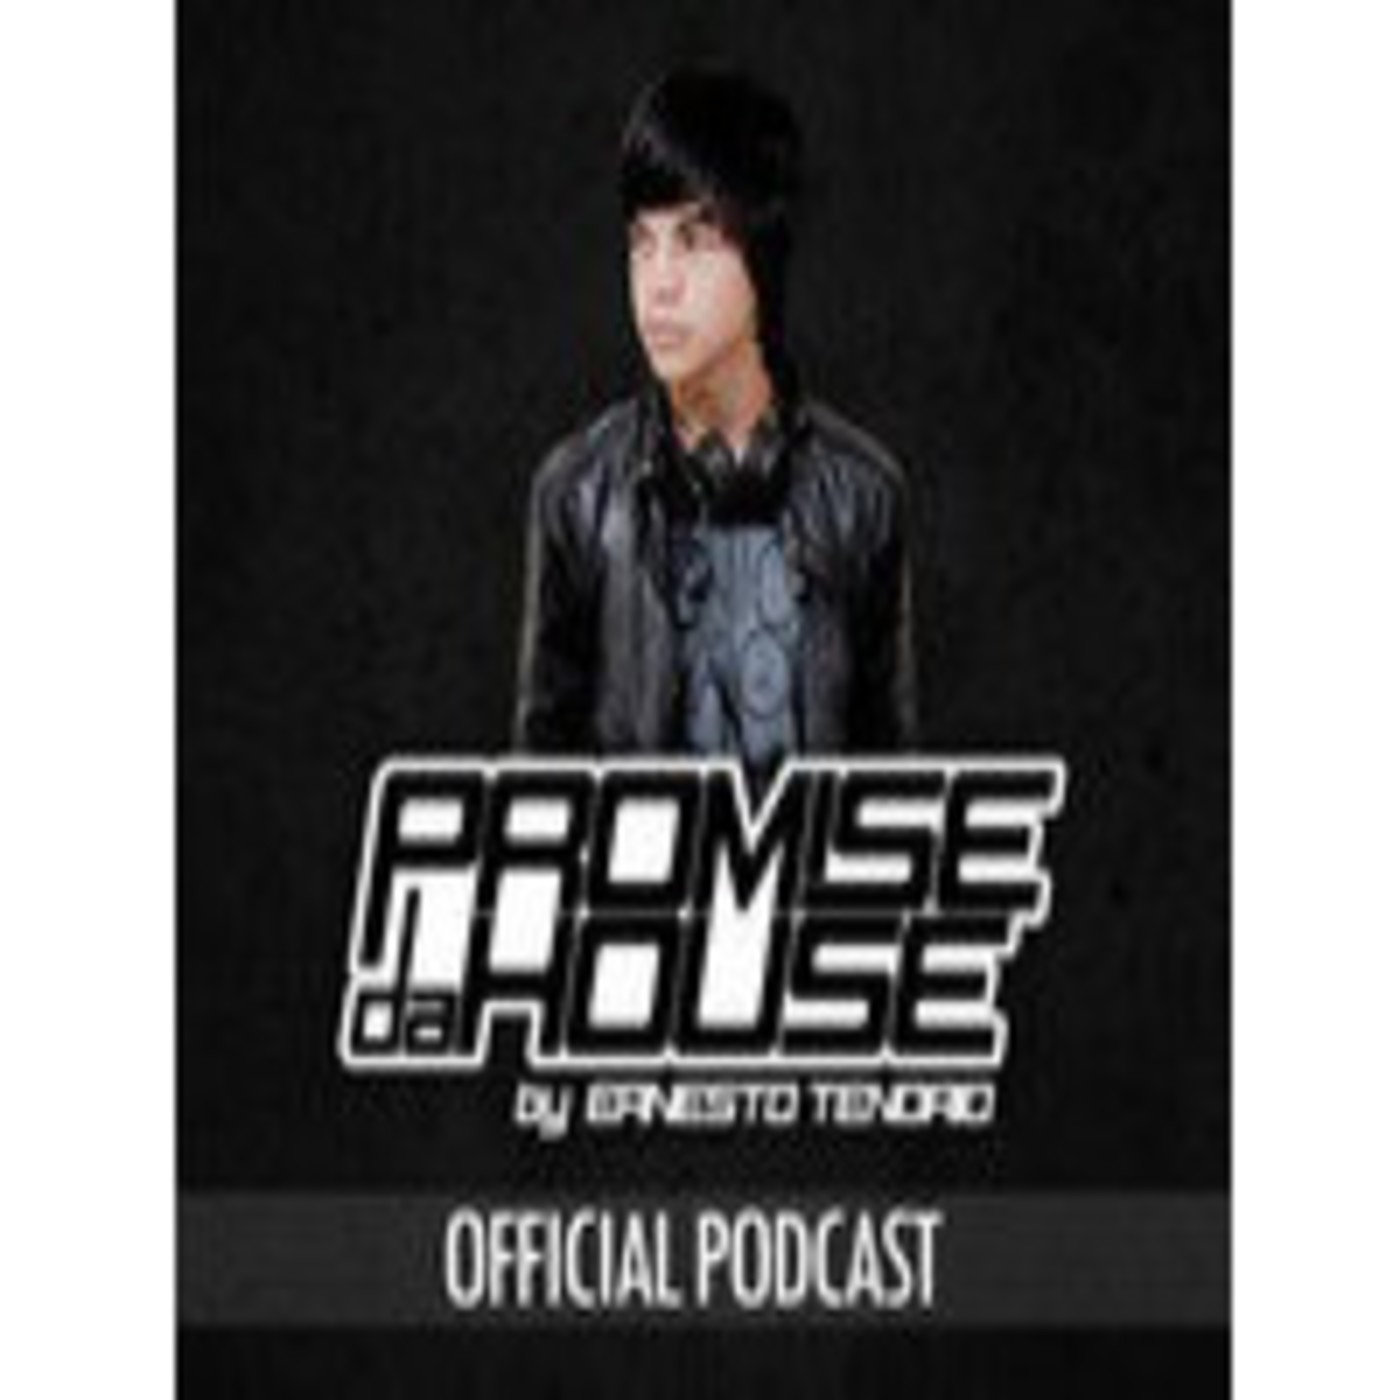 Promise Da House Official Podcast